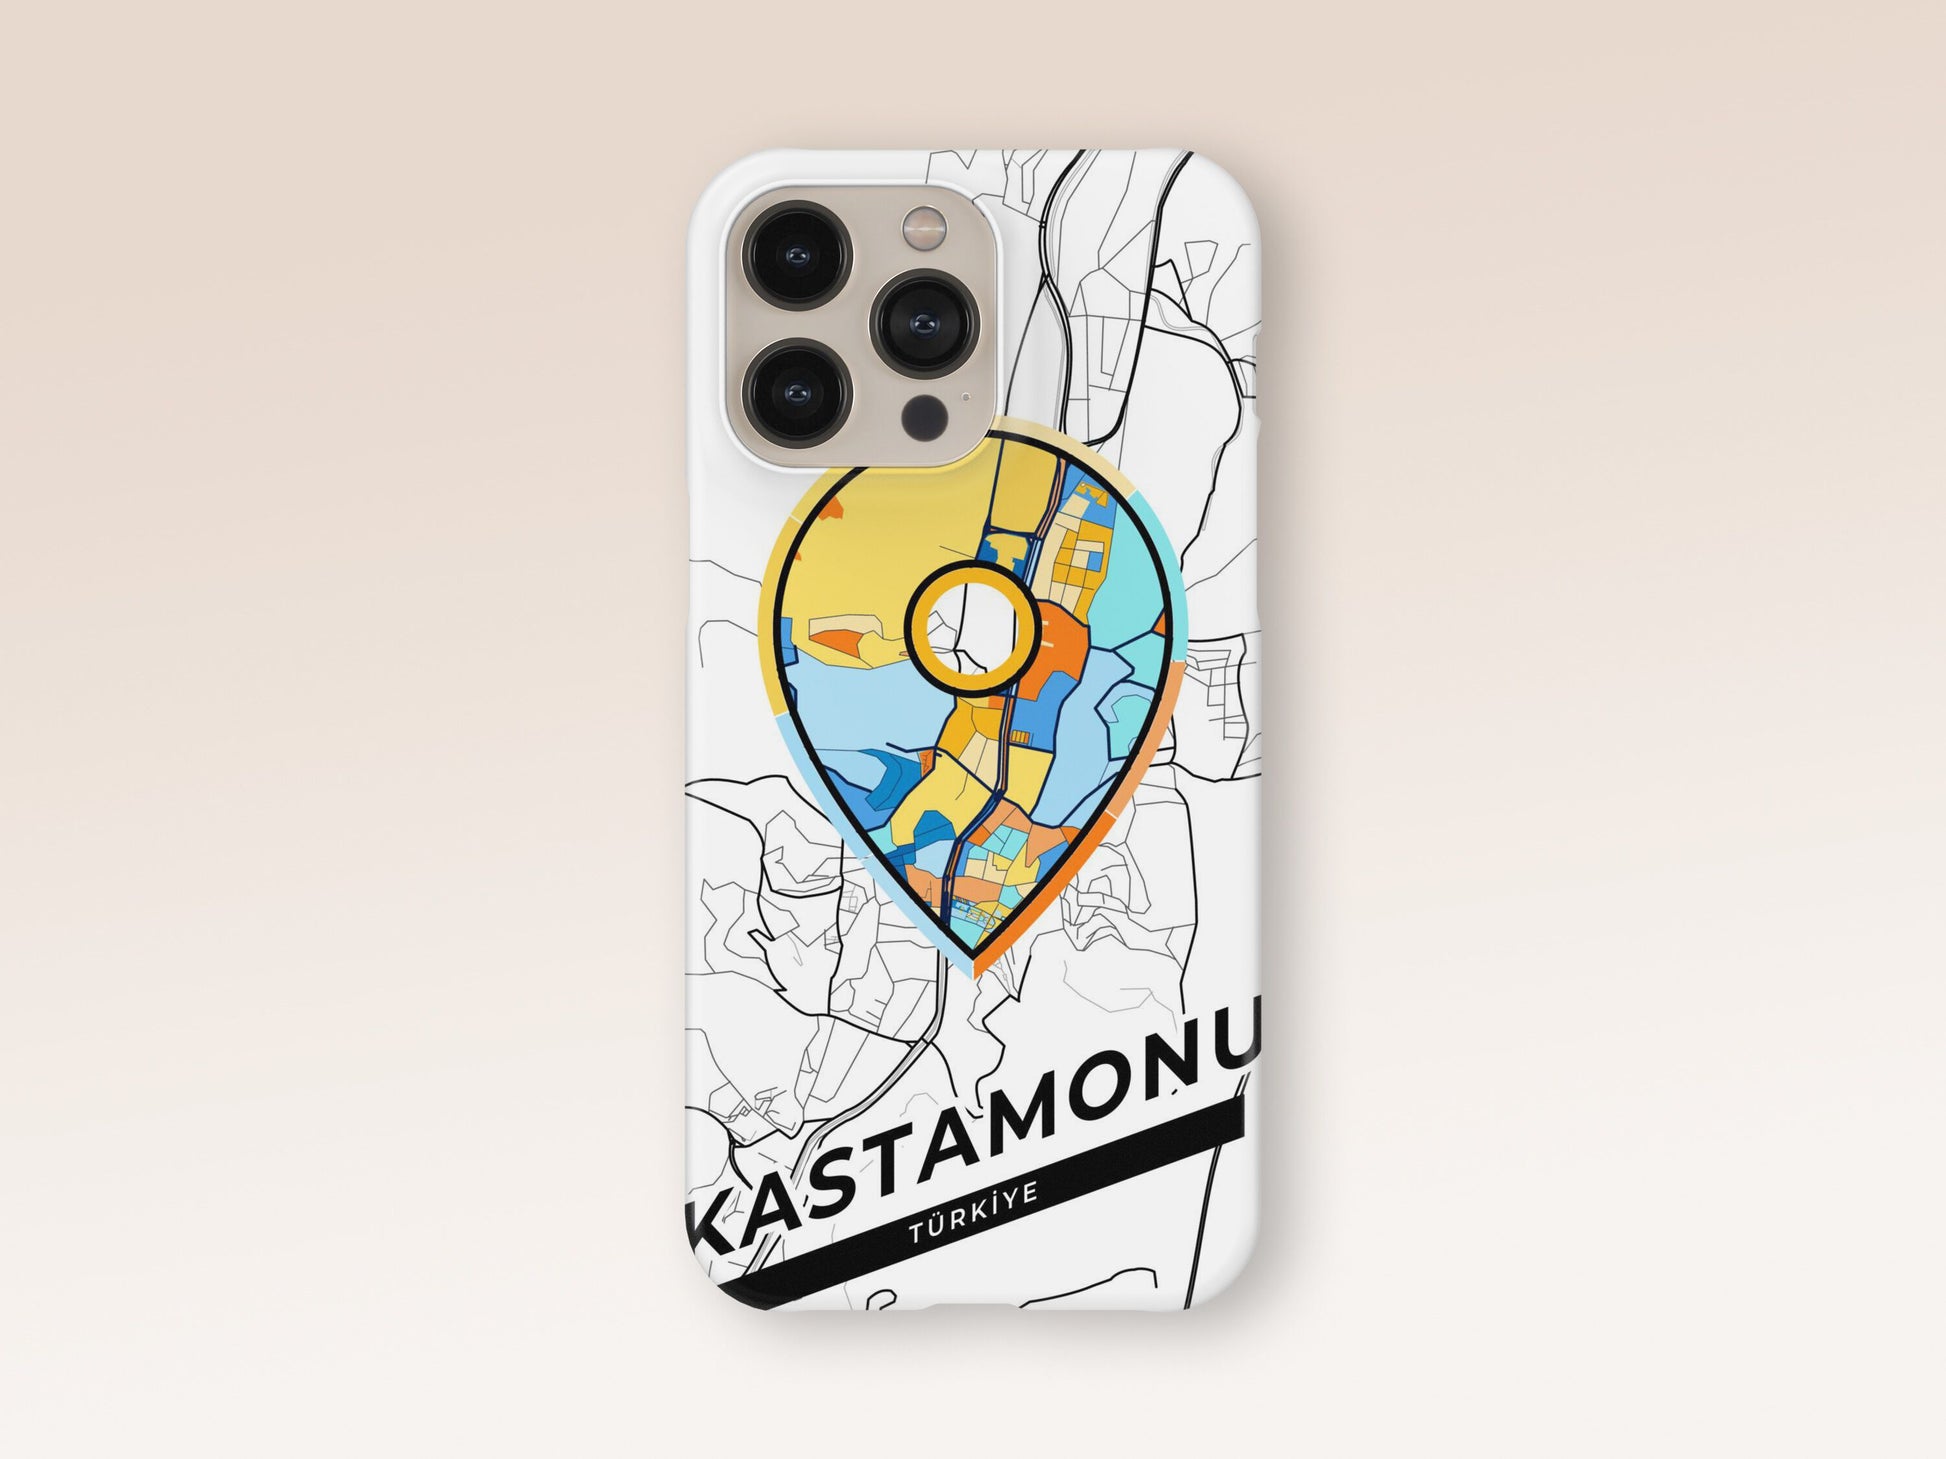 Kastamonu Turkey slim phone case with colorful icon. Birthday, wedding or housewarming gift. Couple match cases. 1